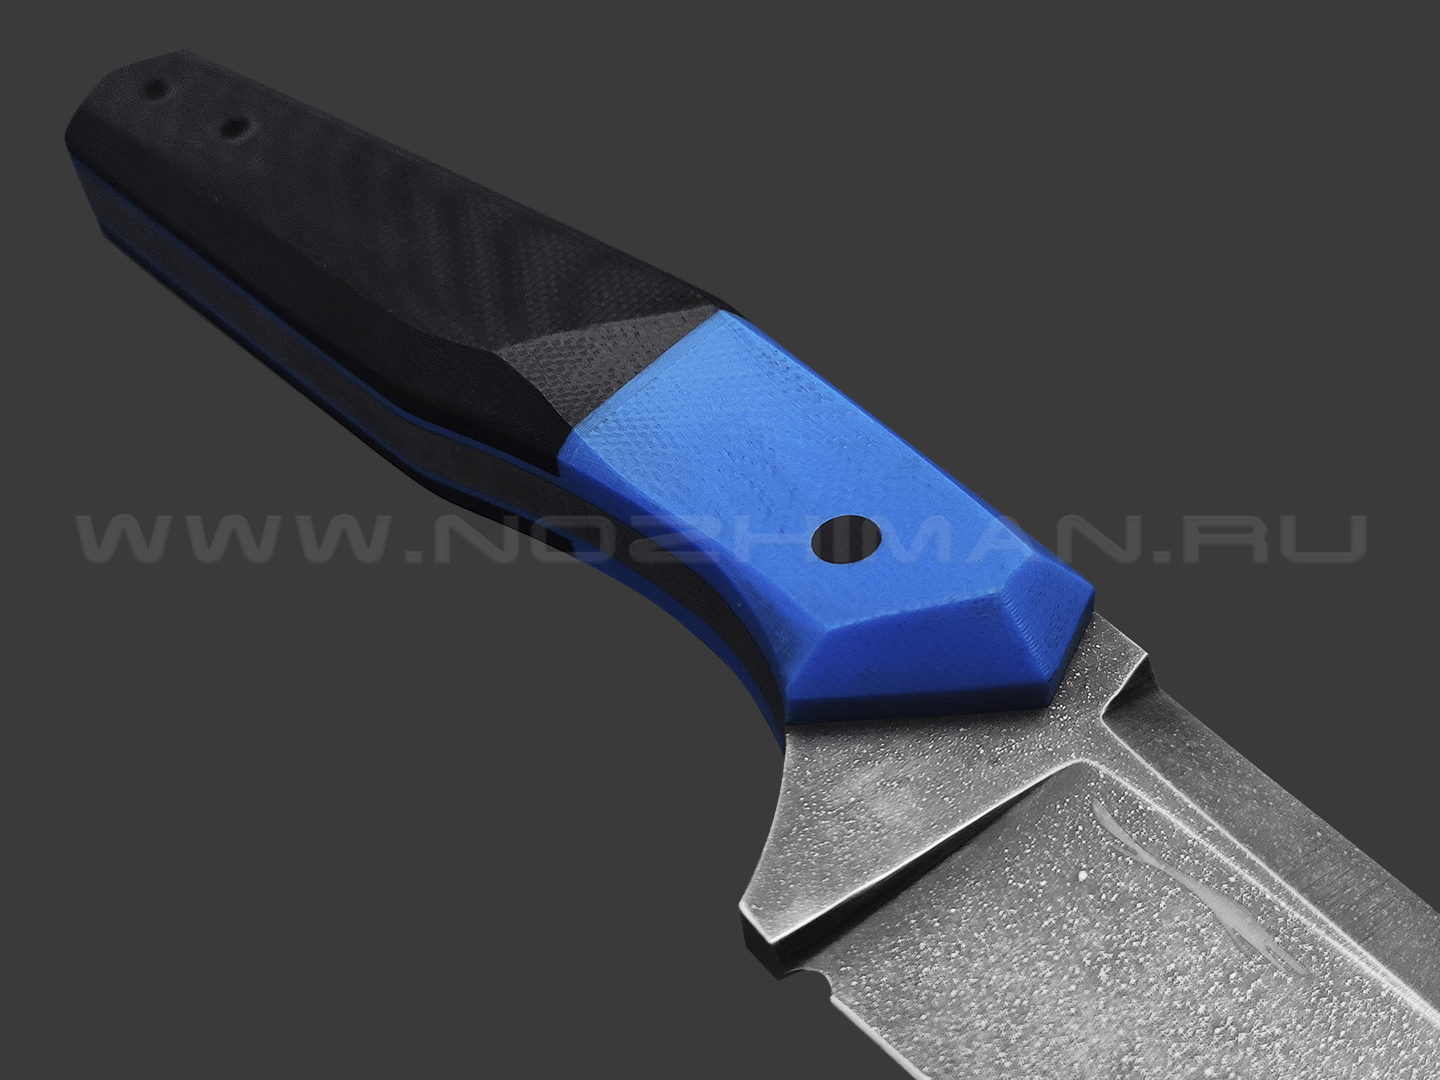 Волчий Век нож Wharn сталь PGK WA травление, рукоять G10 black & blue